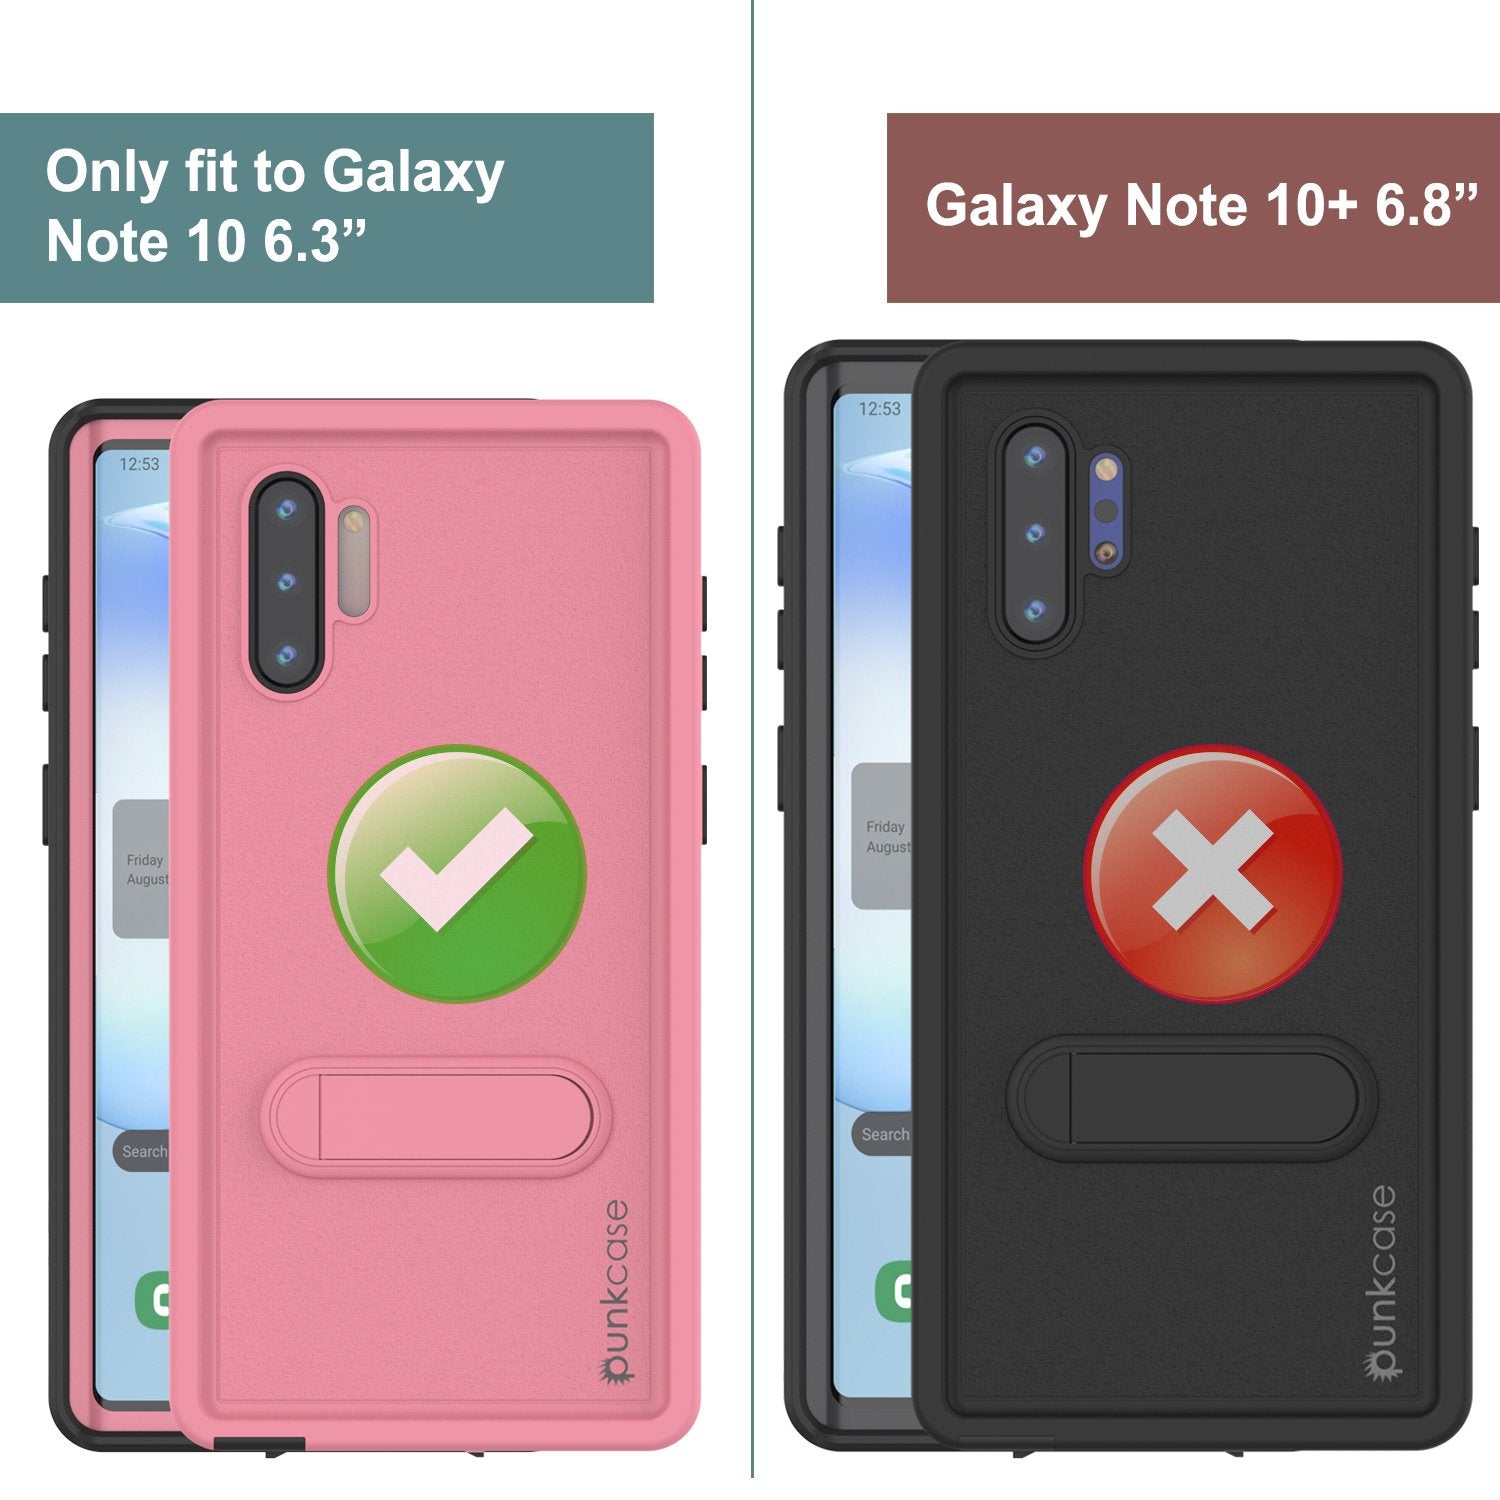 PunkCase Galaxy Note 10 Waterproof Case, [KickStud Series] Armor Cover [Pink]